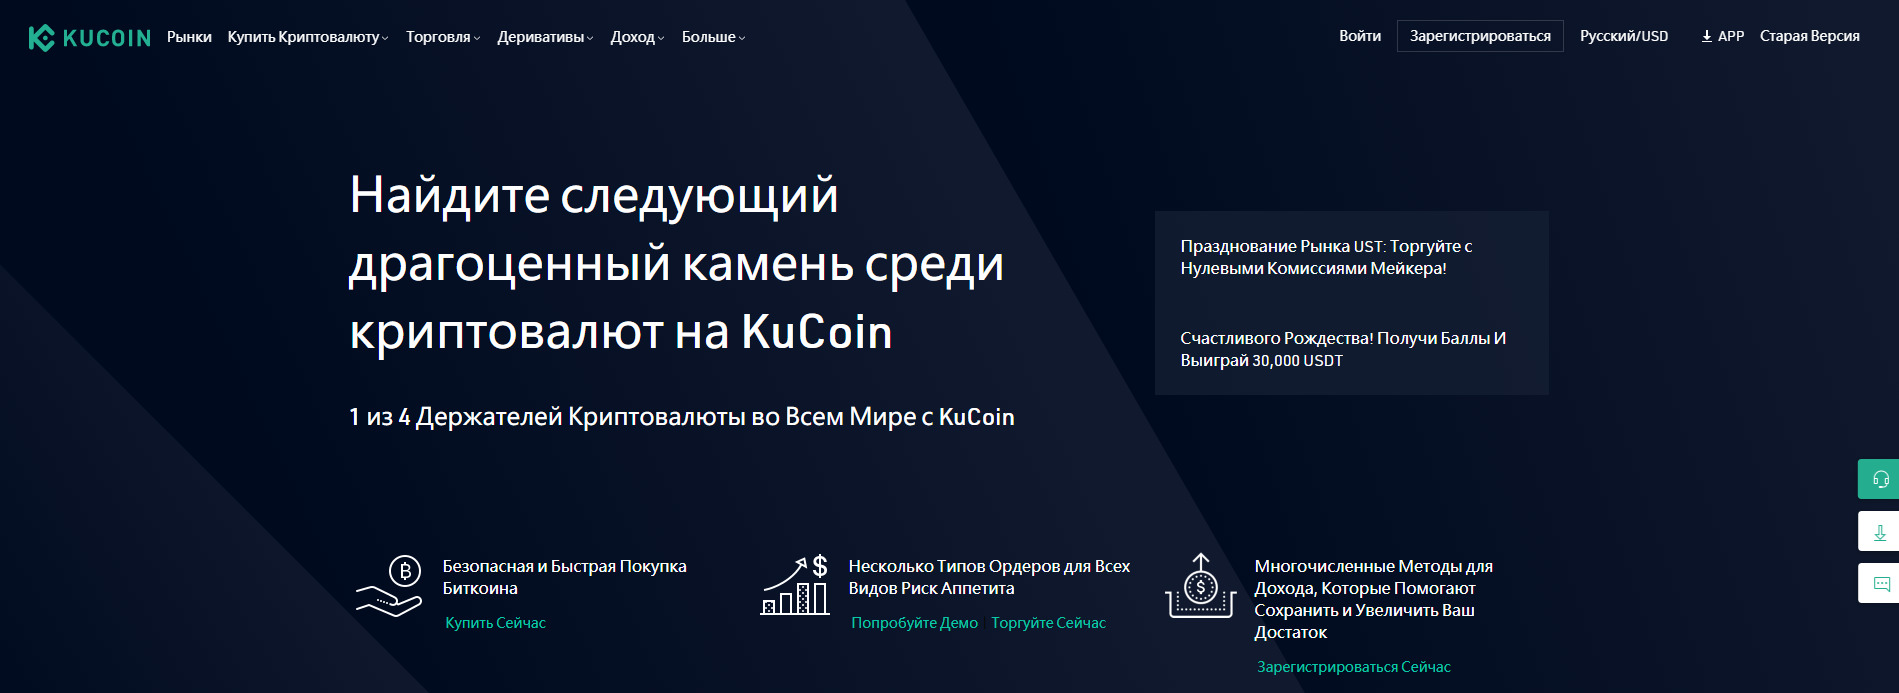 Сайт KuCoin